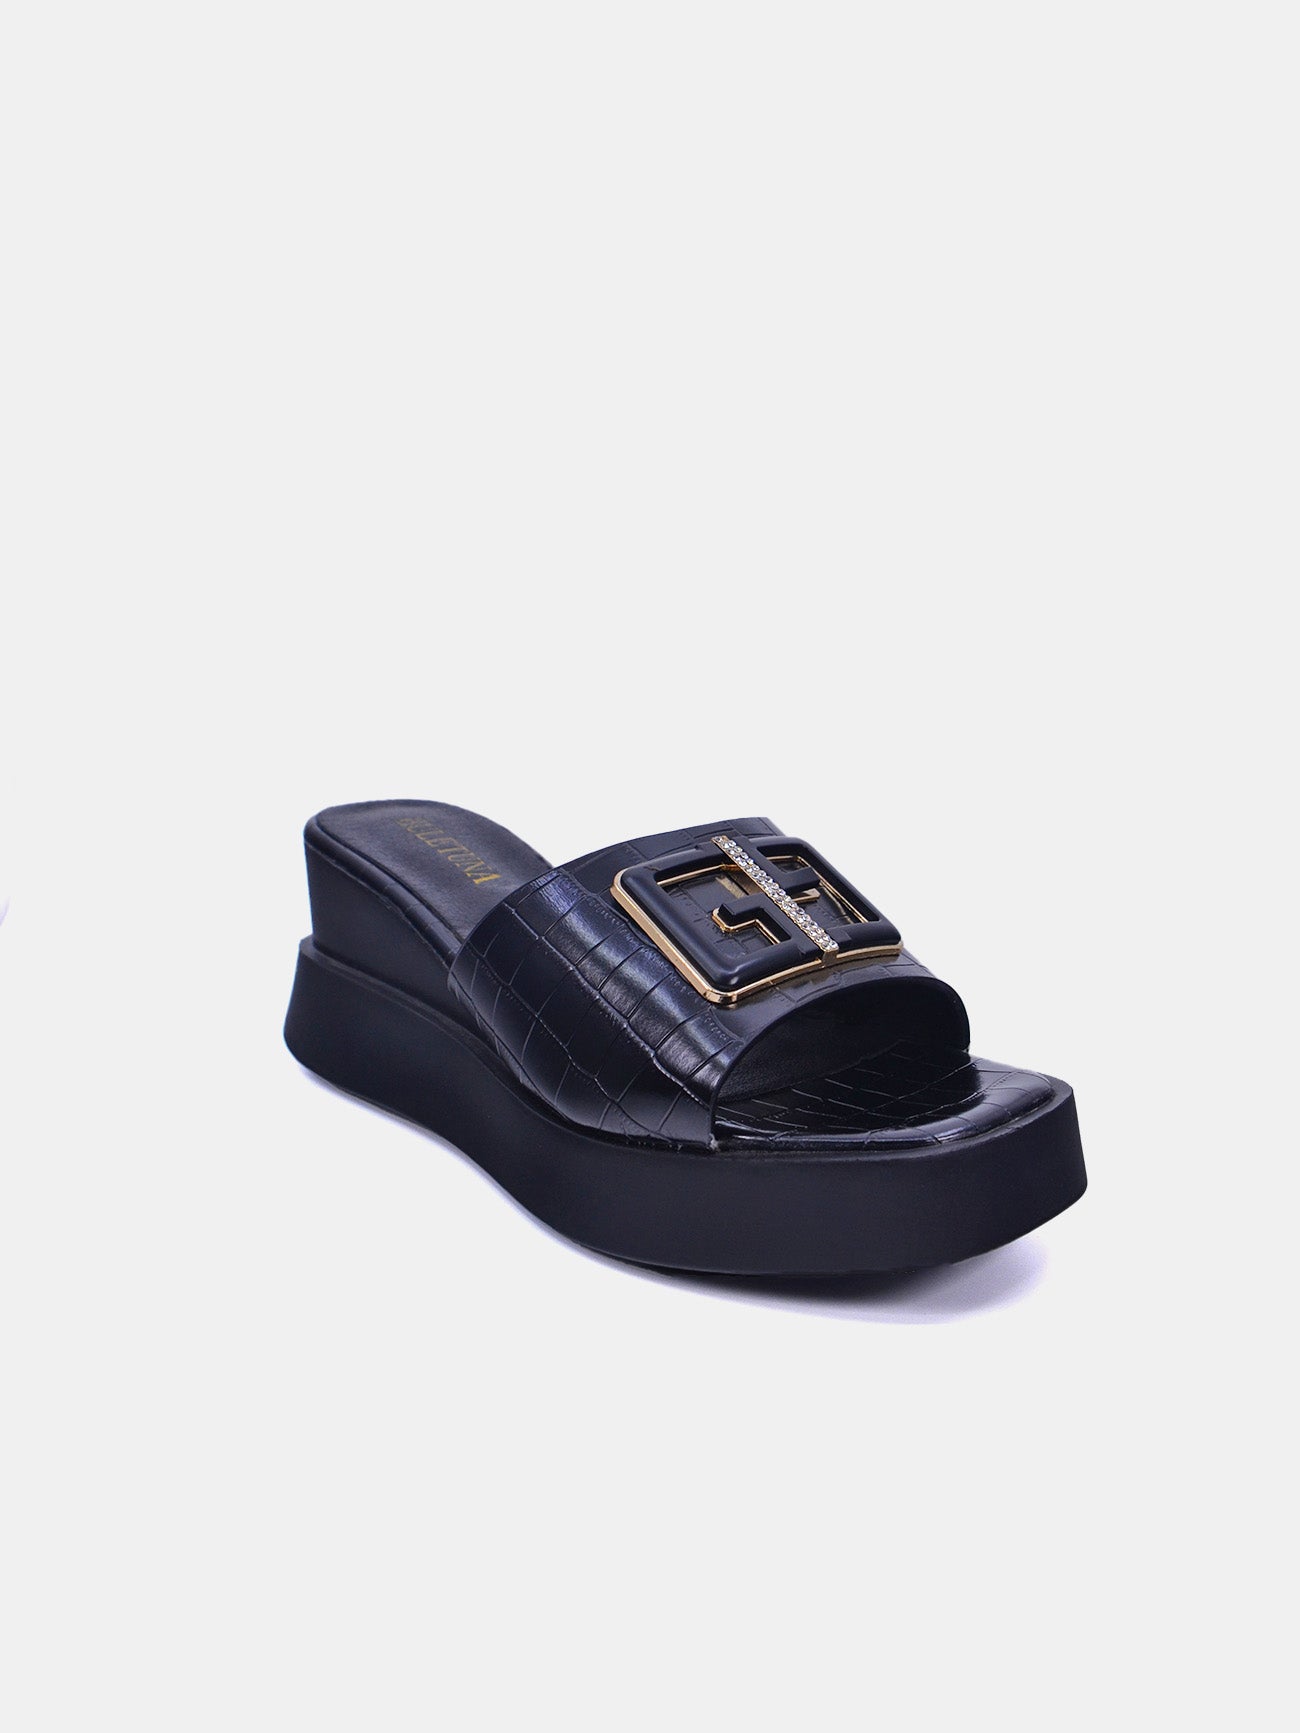 Buletuna YZ629 Women's Sandals #color_Black